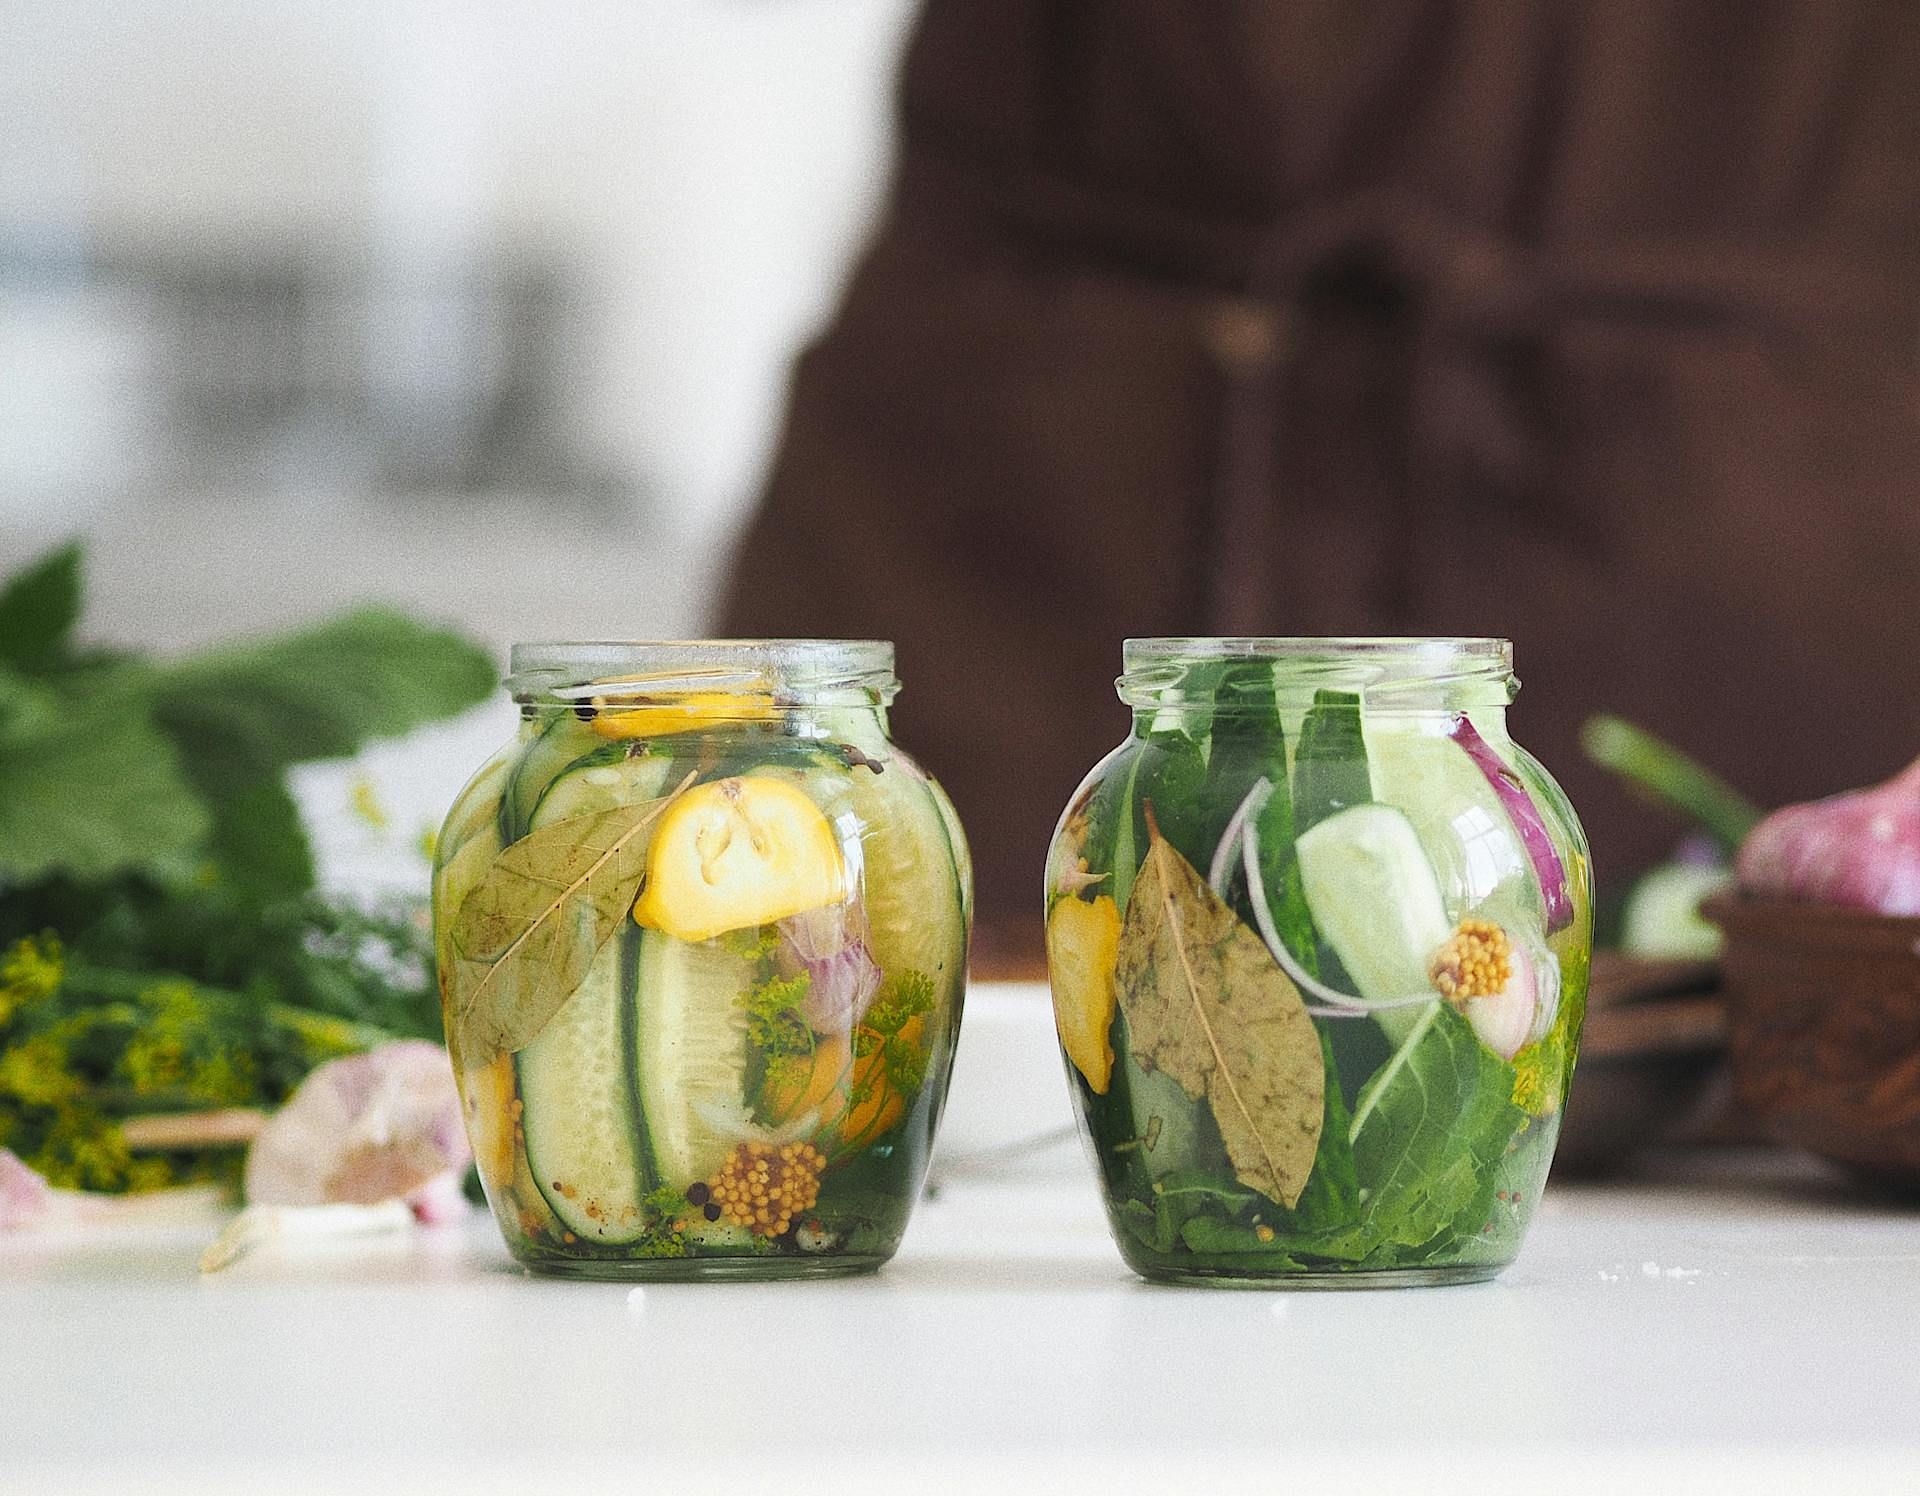 Kimchi may improve immune system (Image via Pexels/ Maria Verkhoturtseva)